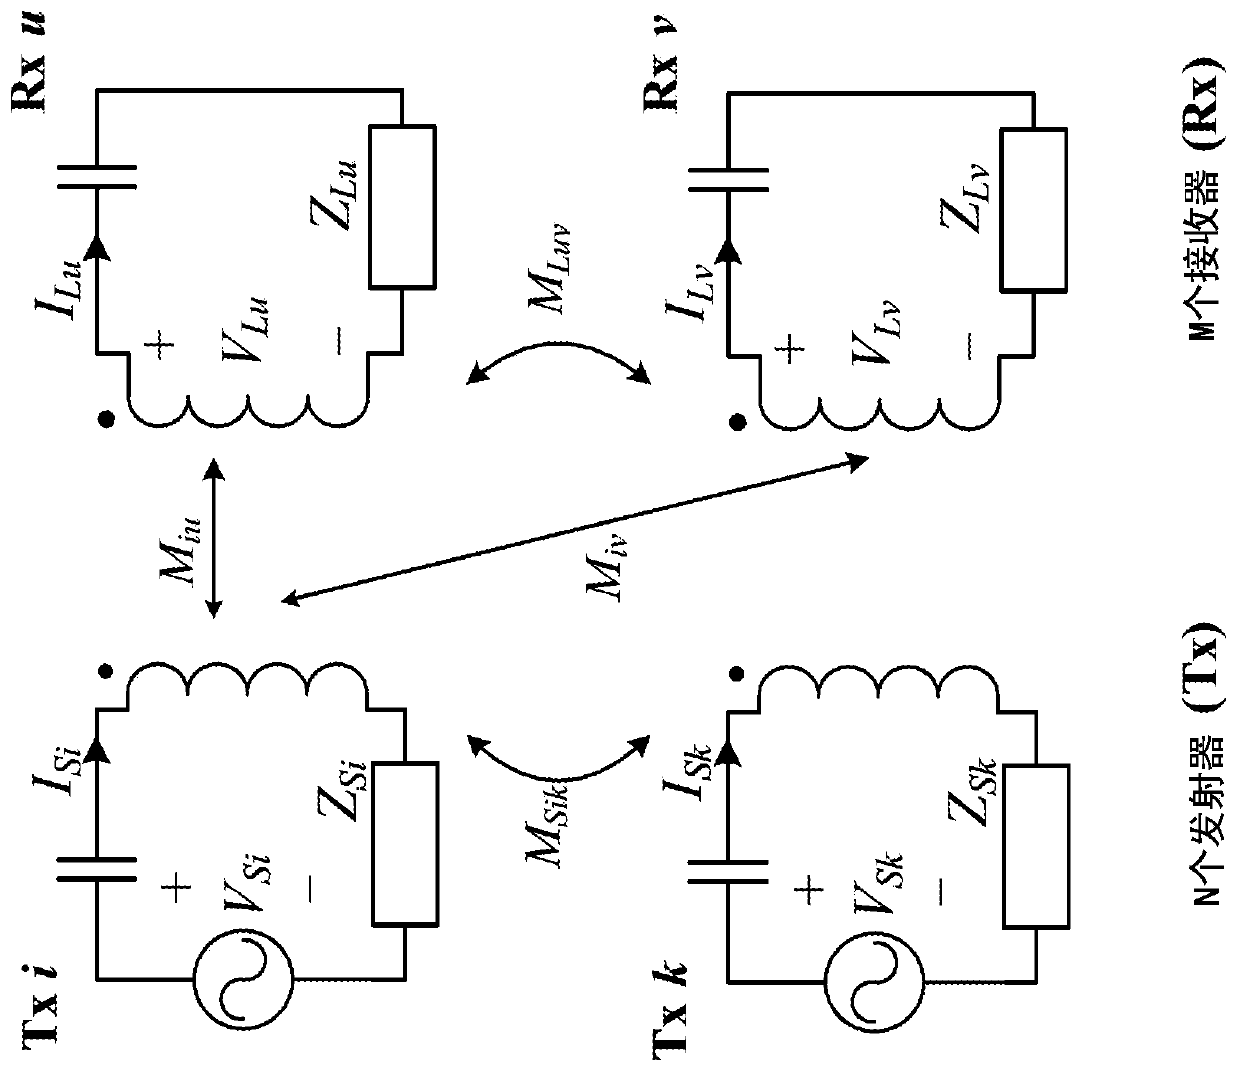 Adaptive Control for Wireless Power Transfer